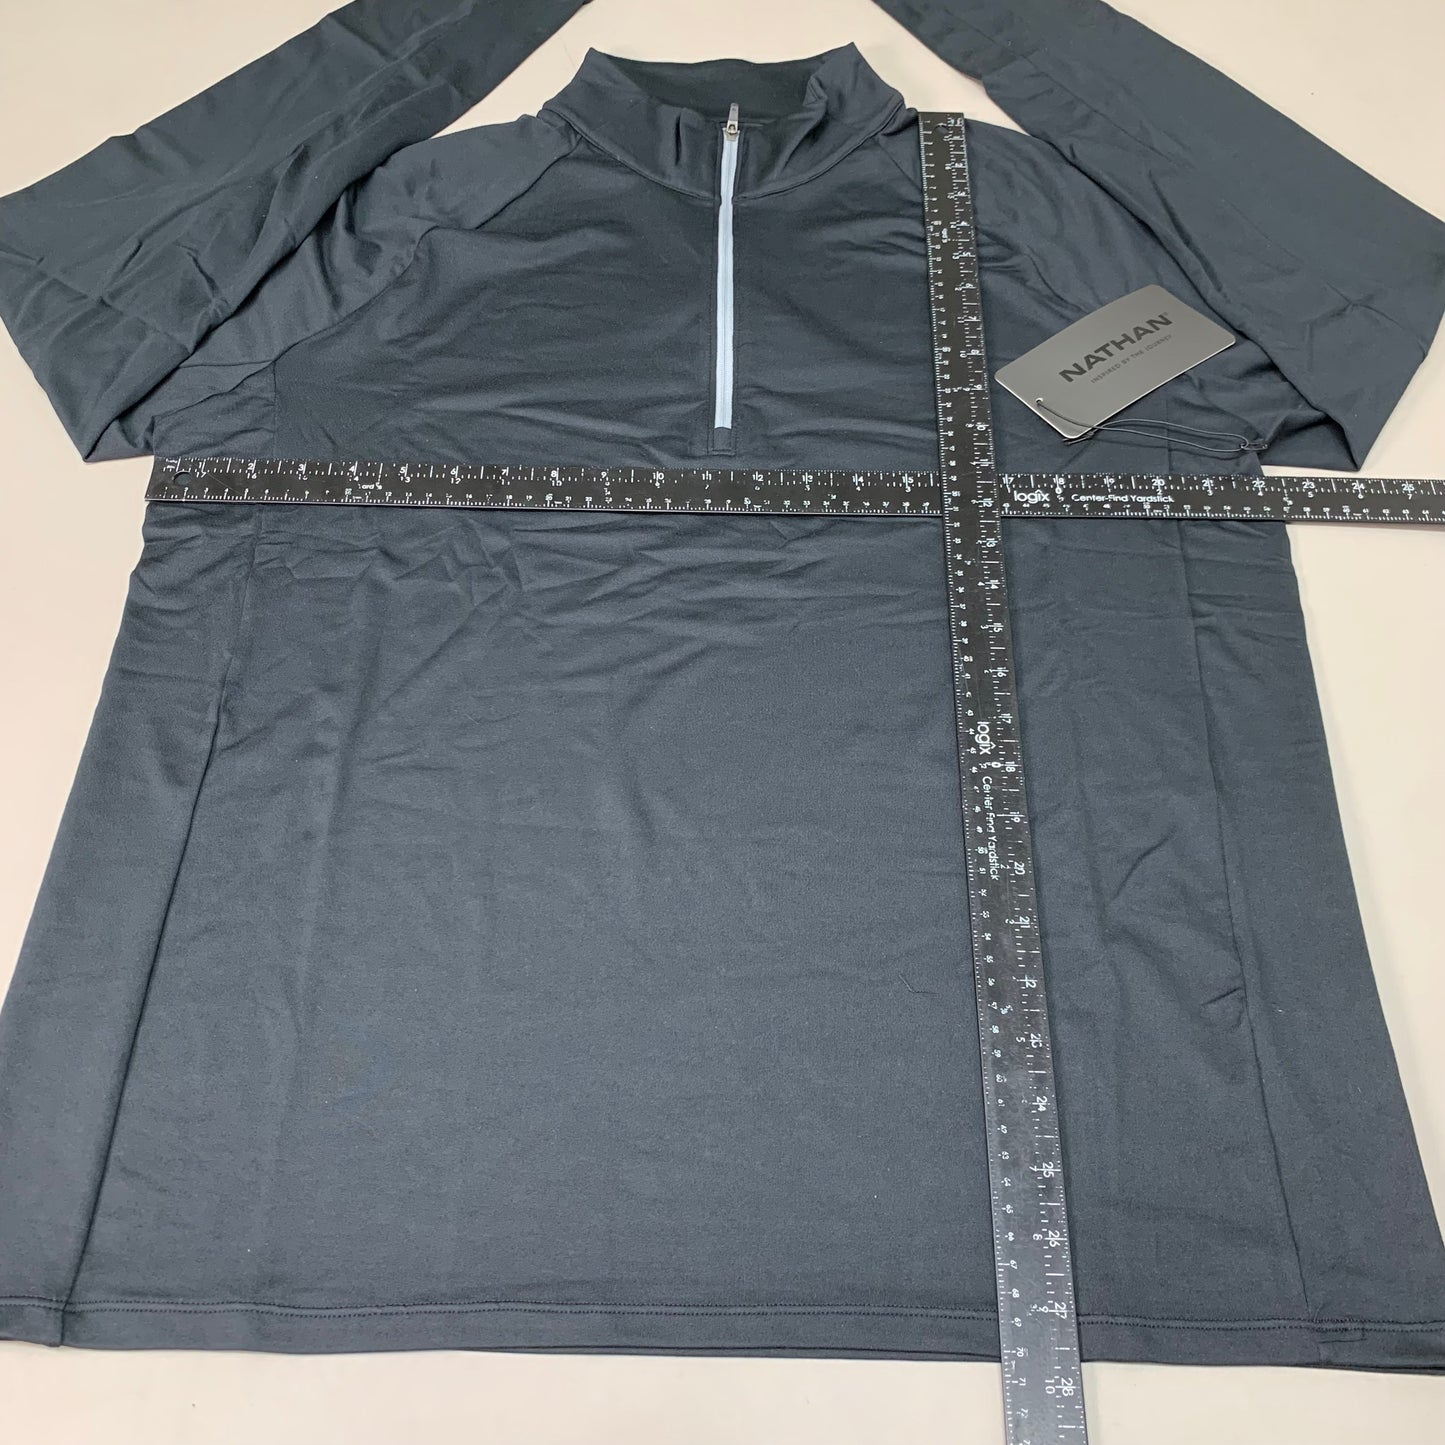 NATHAN Tempo 1/4 Zip Long Sleeve Shirt 2.0 Men's Large Black NS50960-00001-L (New)